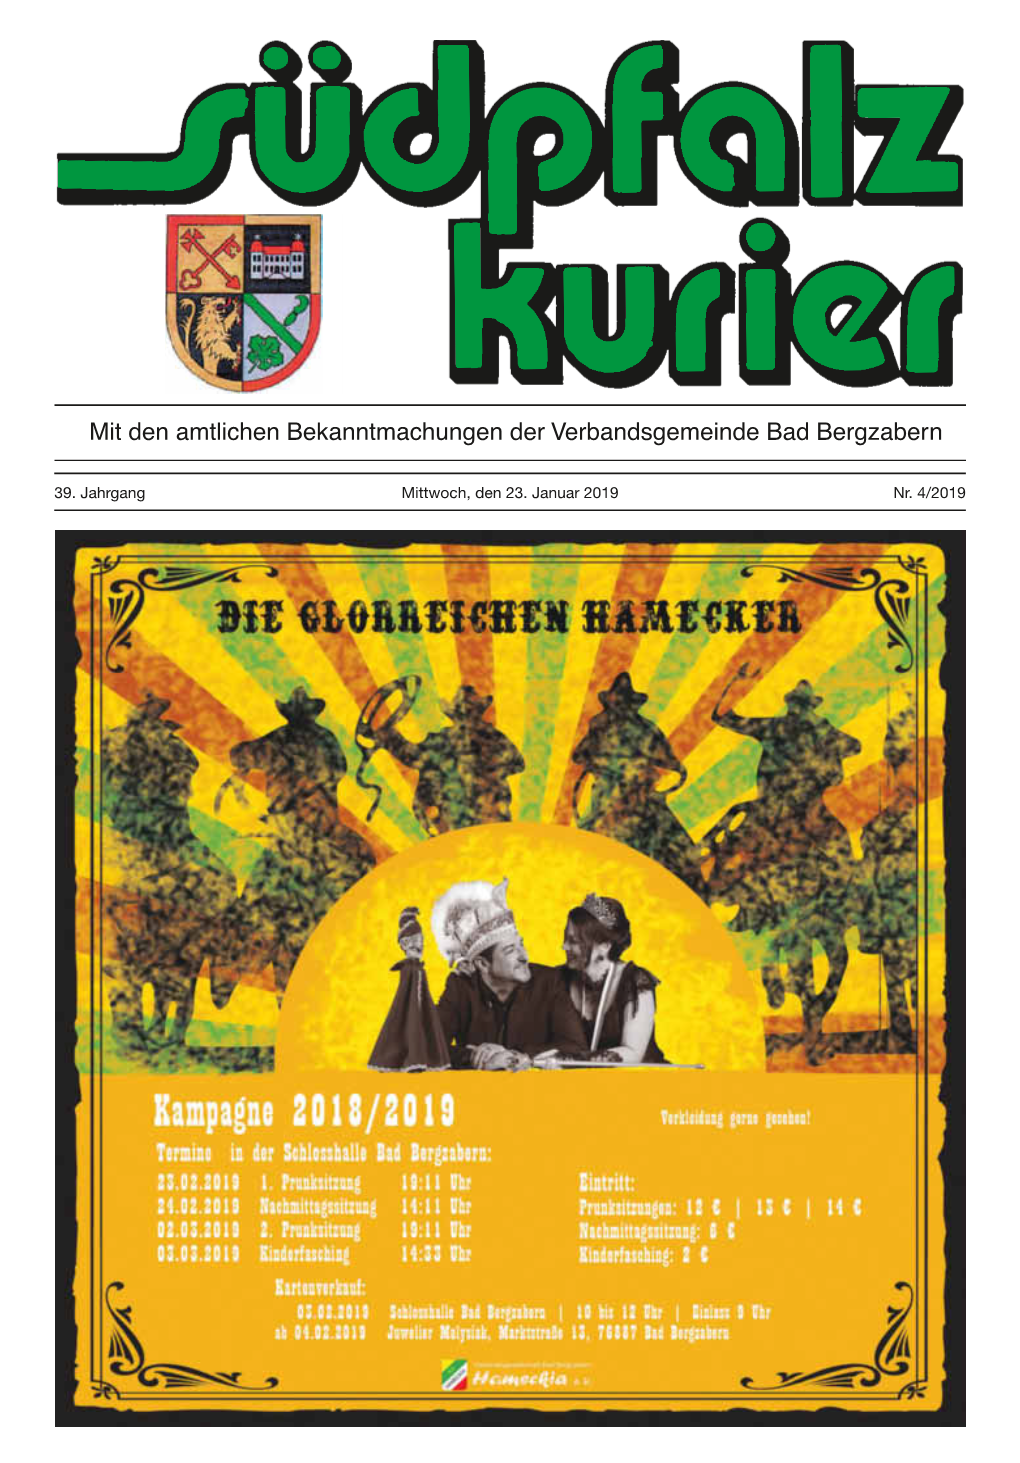 39. Jahrgang Mittwoch, Den 23. Januar 2019 Nr. 4/2019 Bad Bergzabern, Den 23.01.2019 - 2 - Südpfalz Kurier - Ausgabe 4/2019 Auf Einen Blick